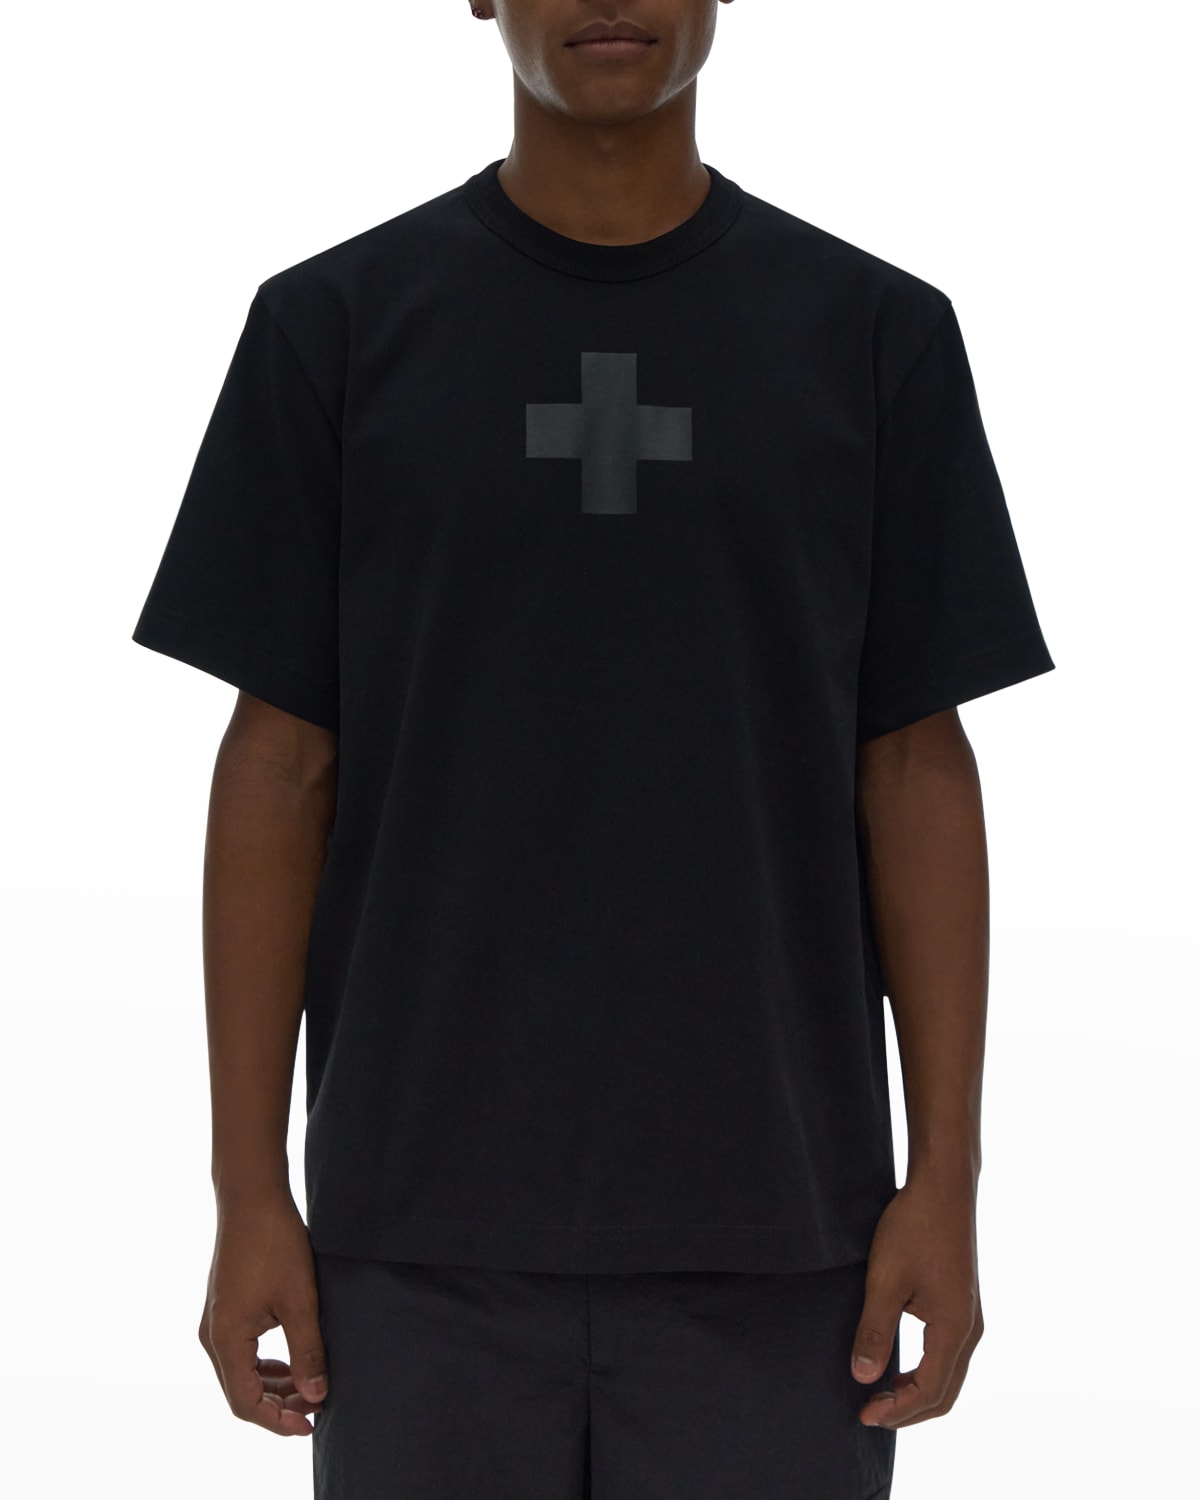 Men's Lifeguard Cross T-Shirt